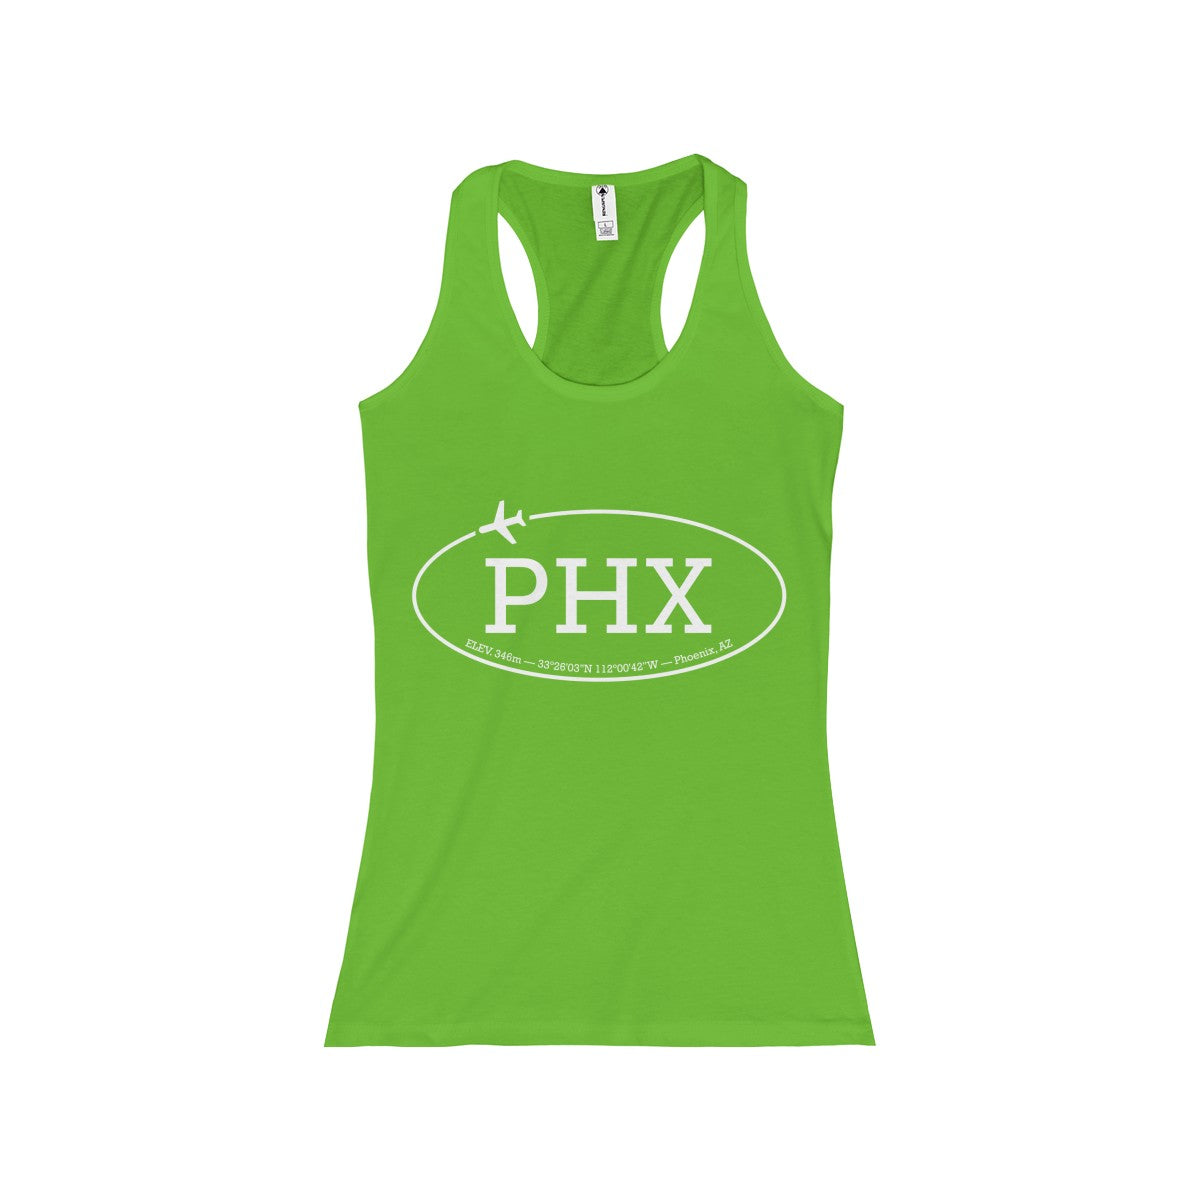 PHX Local - Women's Racerback Tank